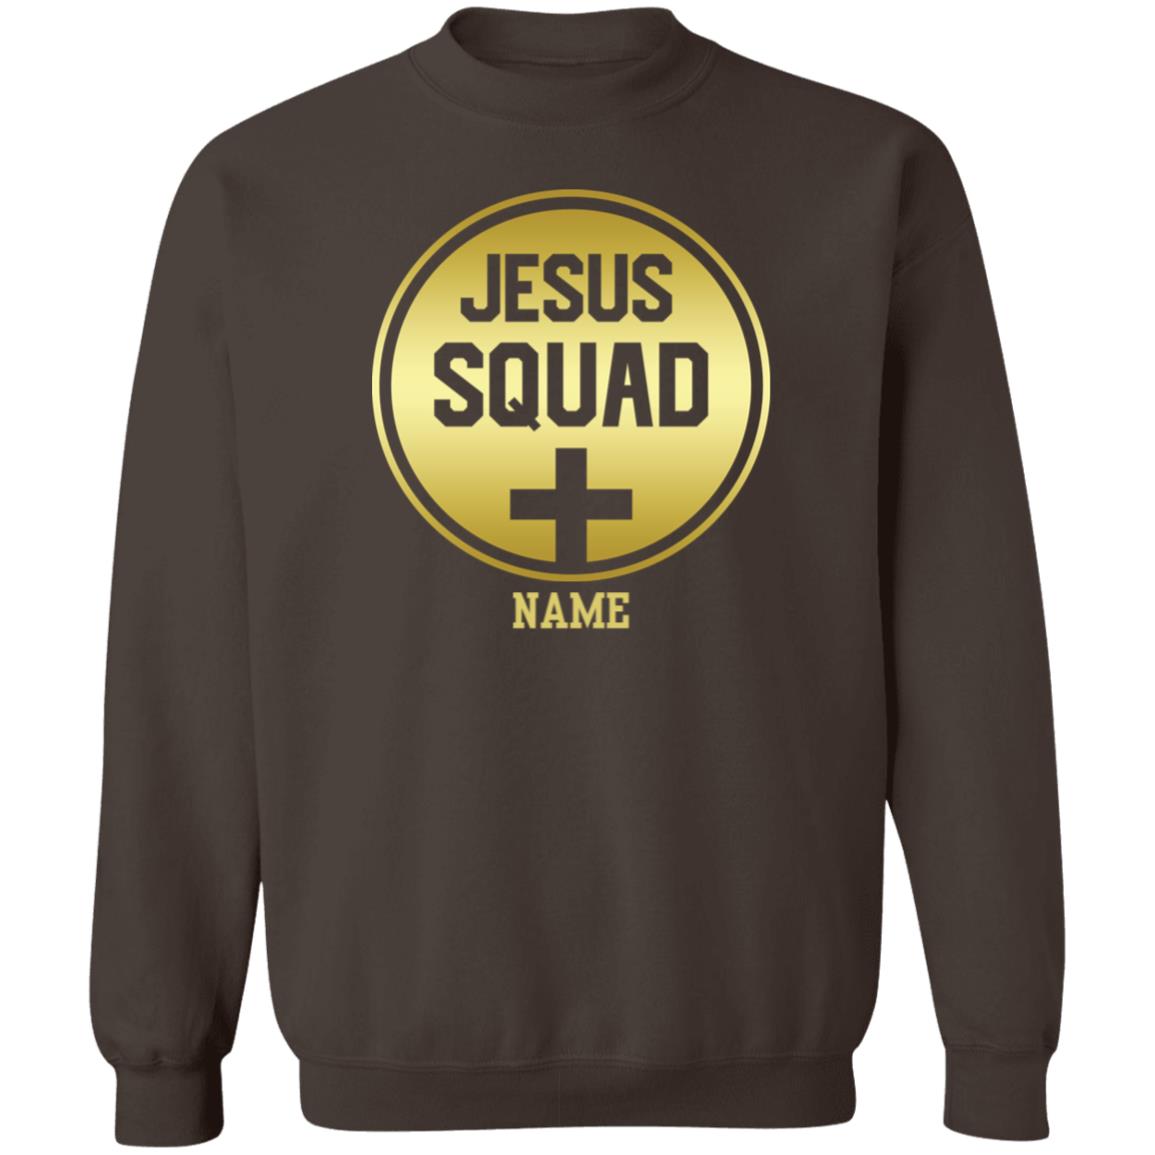 Jesus Squad Personalizable Sweatshirt